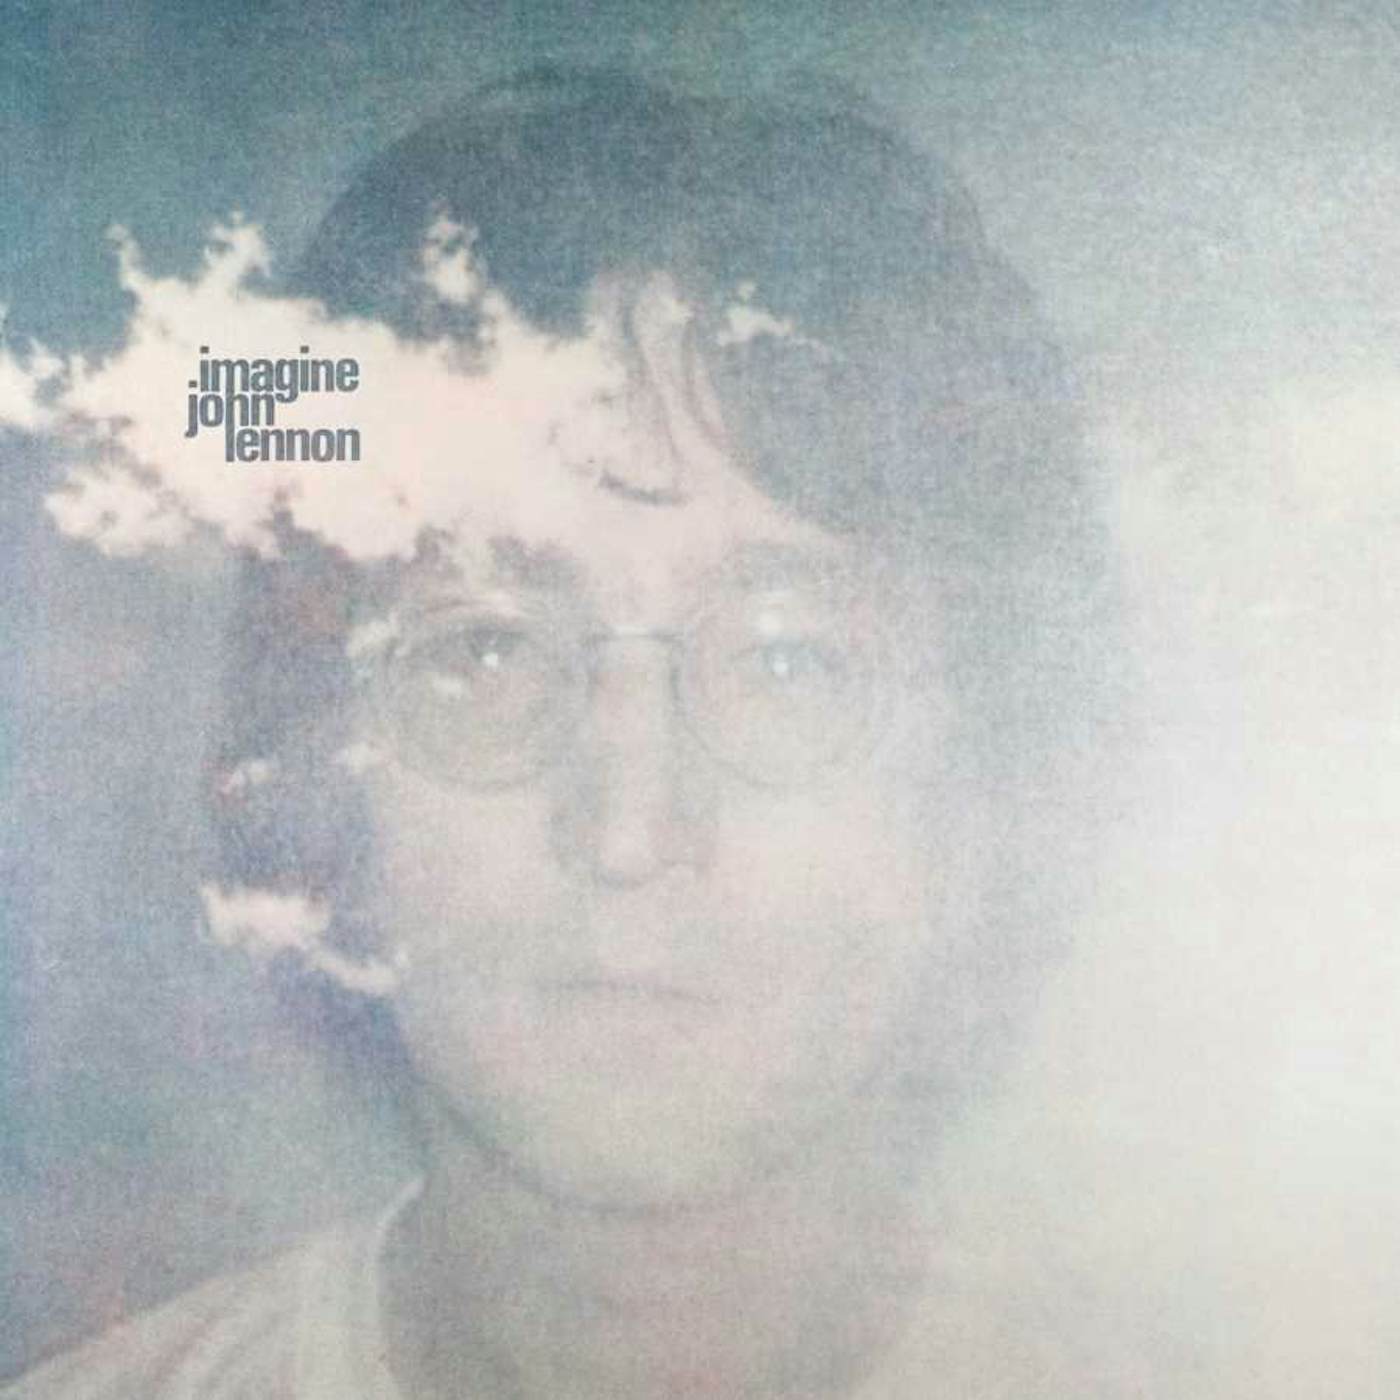 John Lennon IMAGINE: THE ULTIMATE MIXES CD